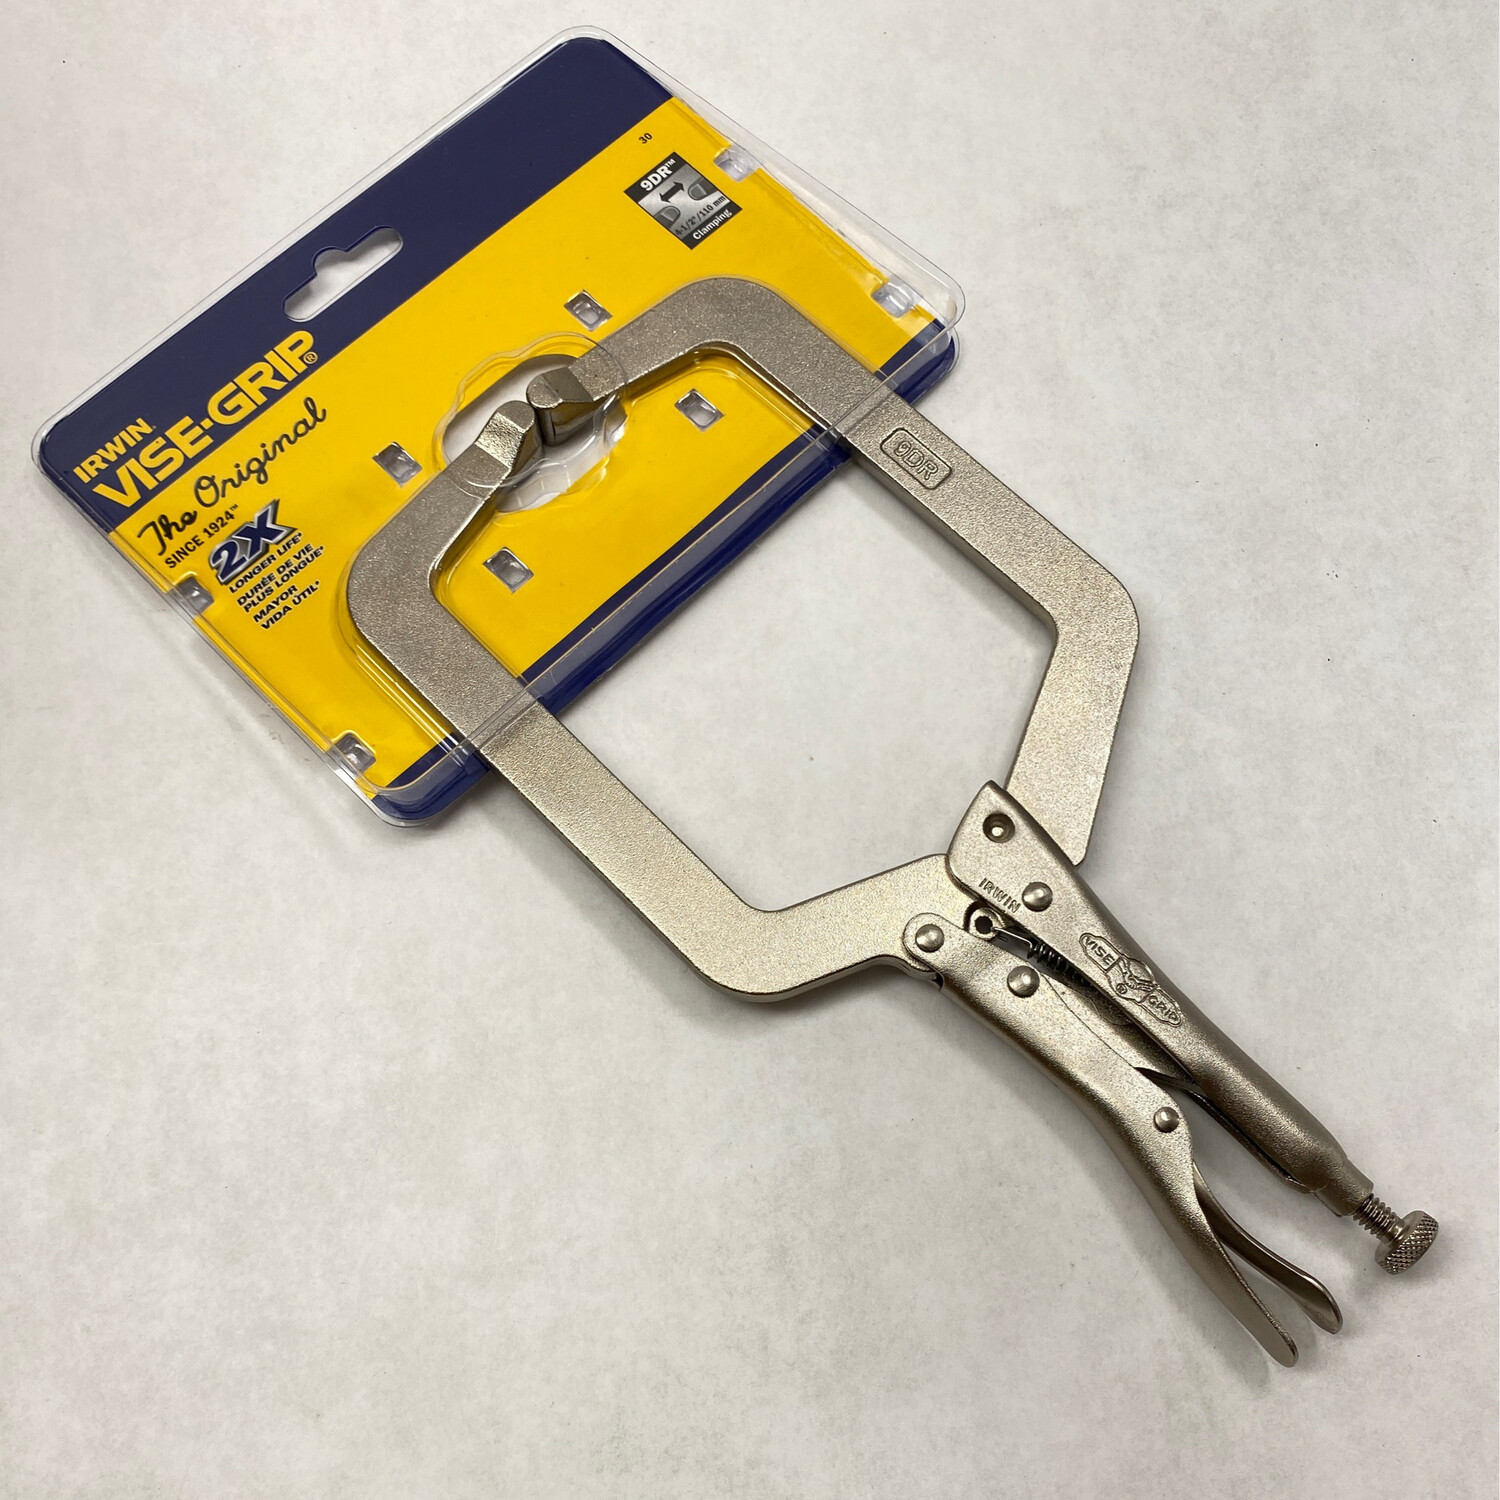 Irwin Vice Grip 9” C-Clamp Locking Pliers, 9DR